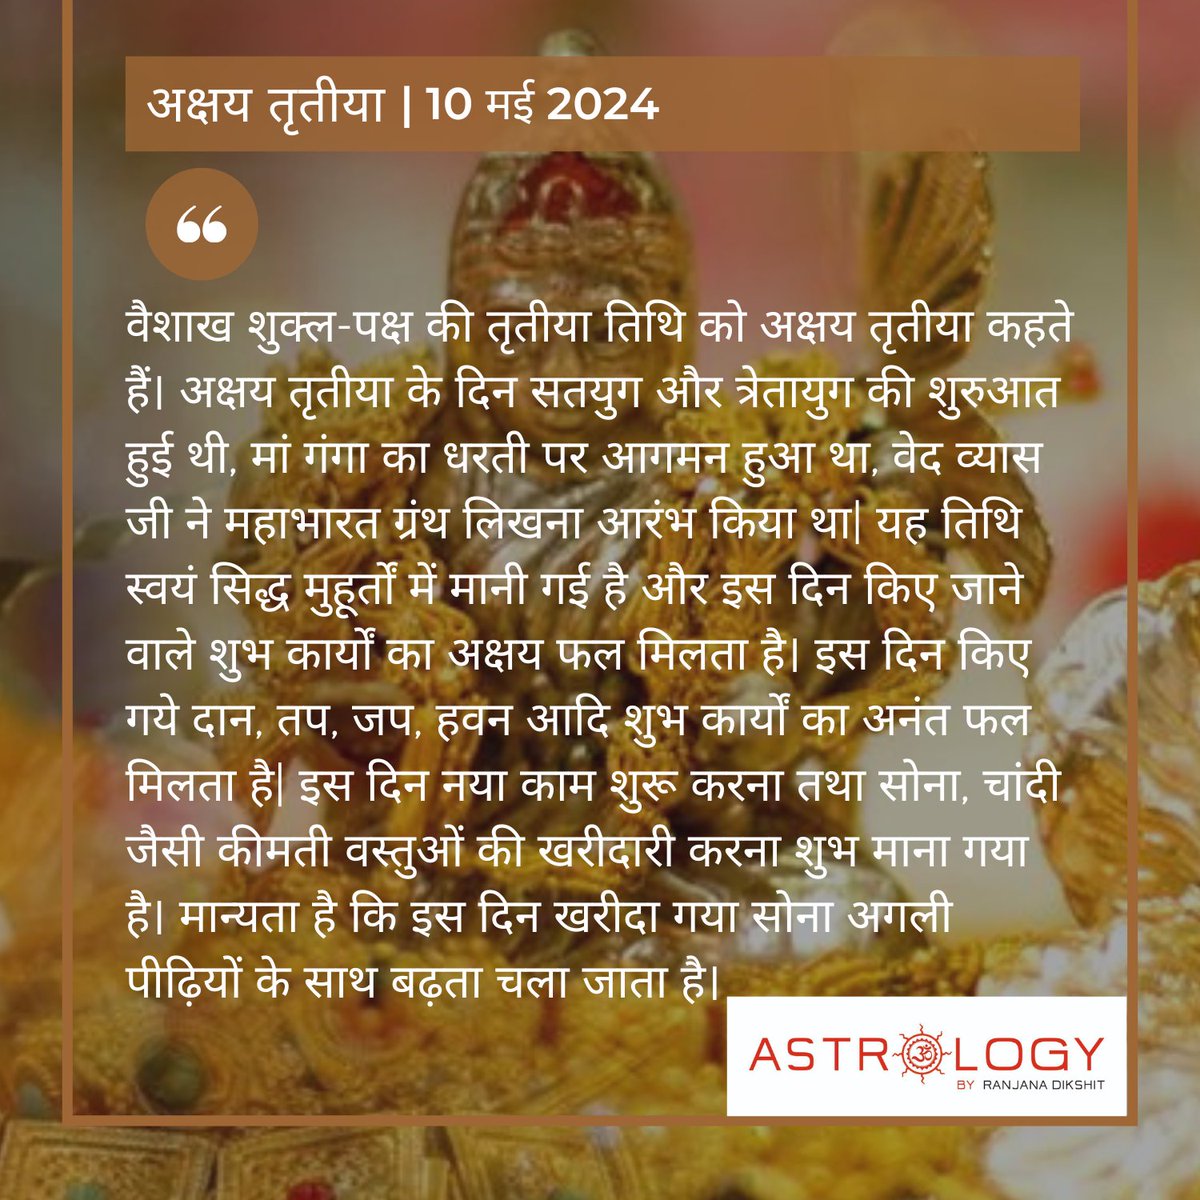 अक्षय तृतीया - 10 मई 2024

#akshay #tritiya #vedas #hinduism #sanatan #dharma #astrology #astrologer #jyotishi #jyotish #hindi #followers #likes #ranjanadikshit